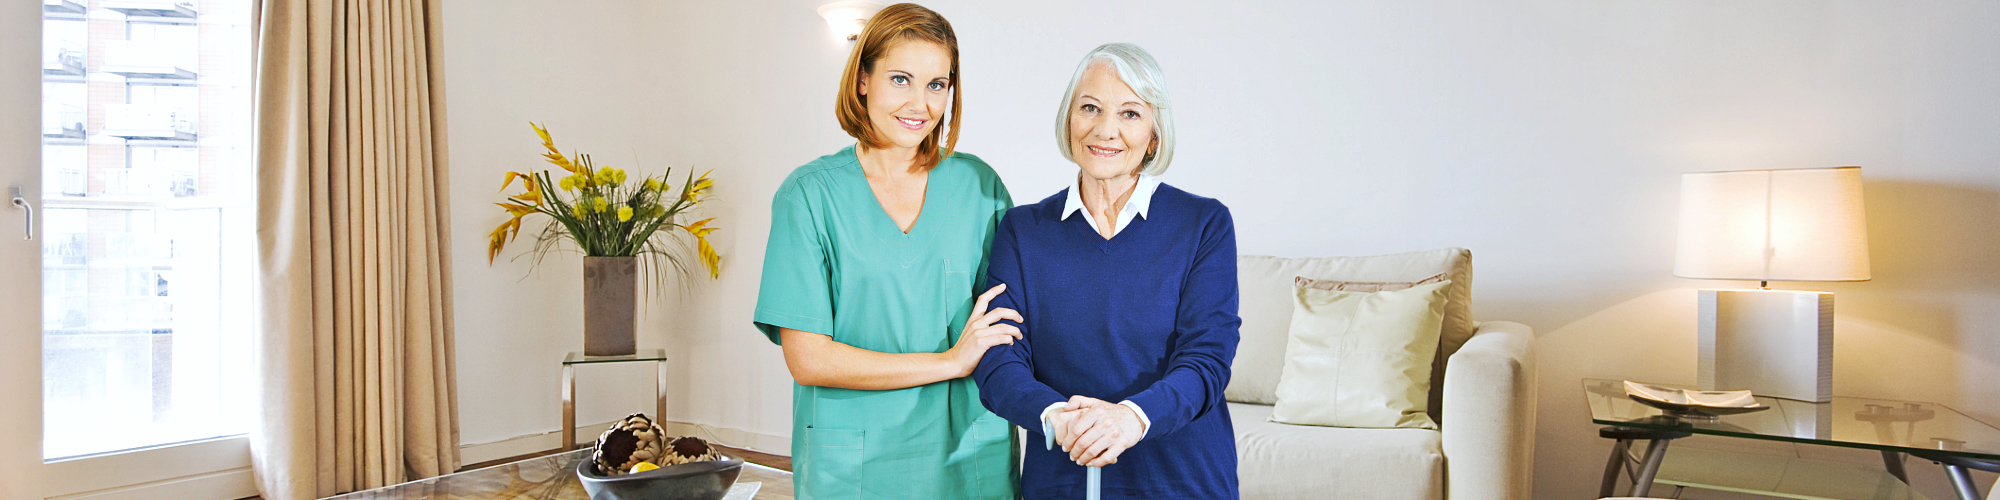 female caregiver and senior woman smiling